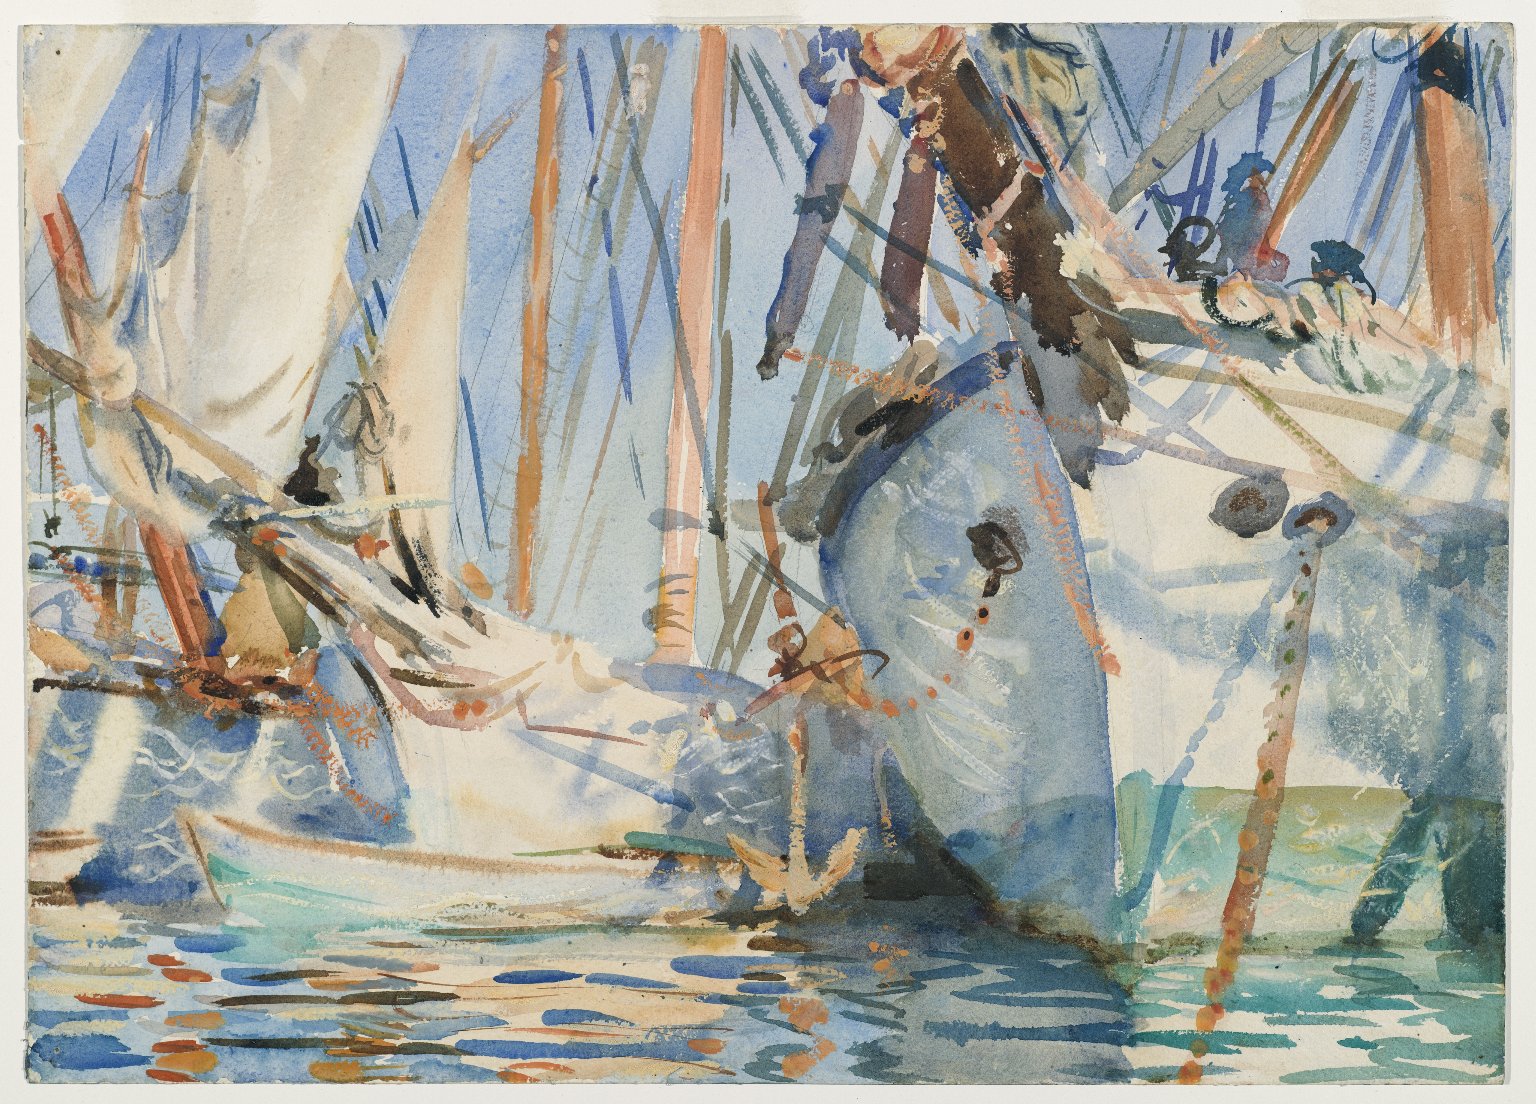 Nave albe by John Singer Sargent - 1908 - 35.2 x 49.2 cm 